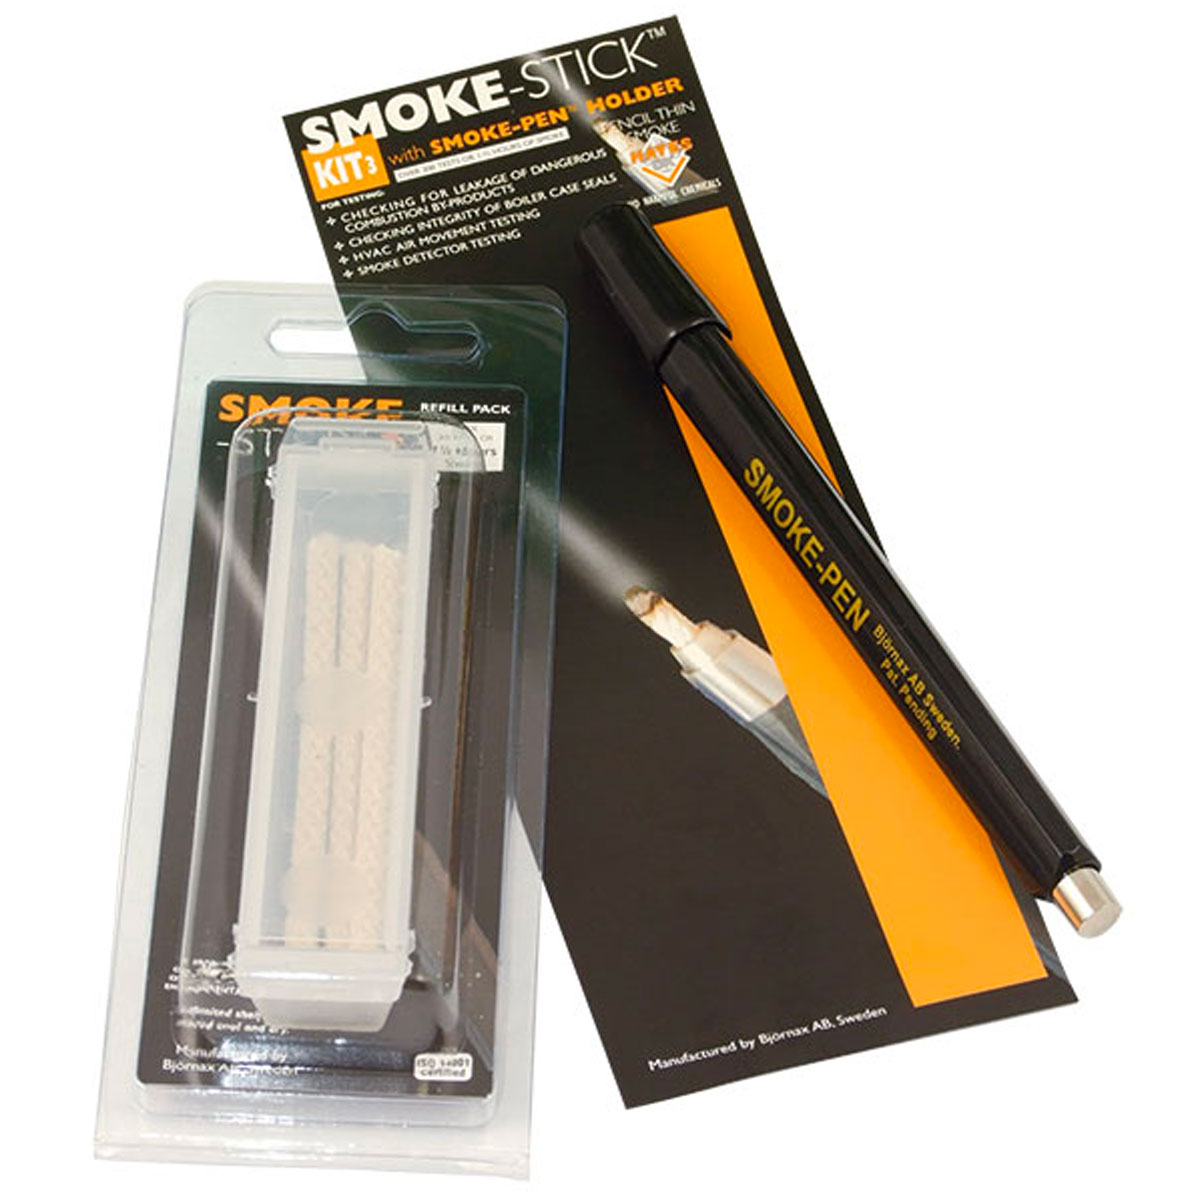 Smoke Stick Kit - Smoke Pen Holder with 3 Refills